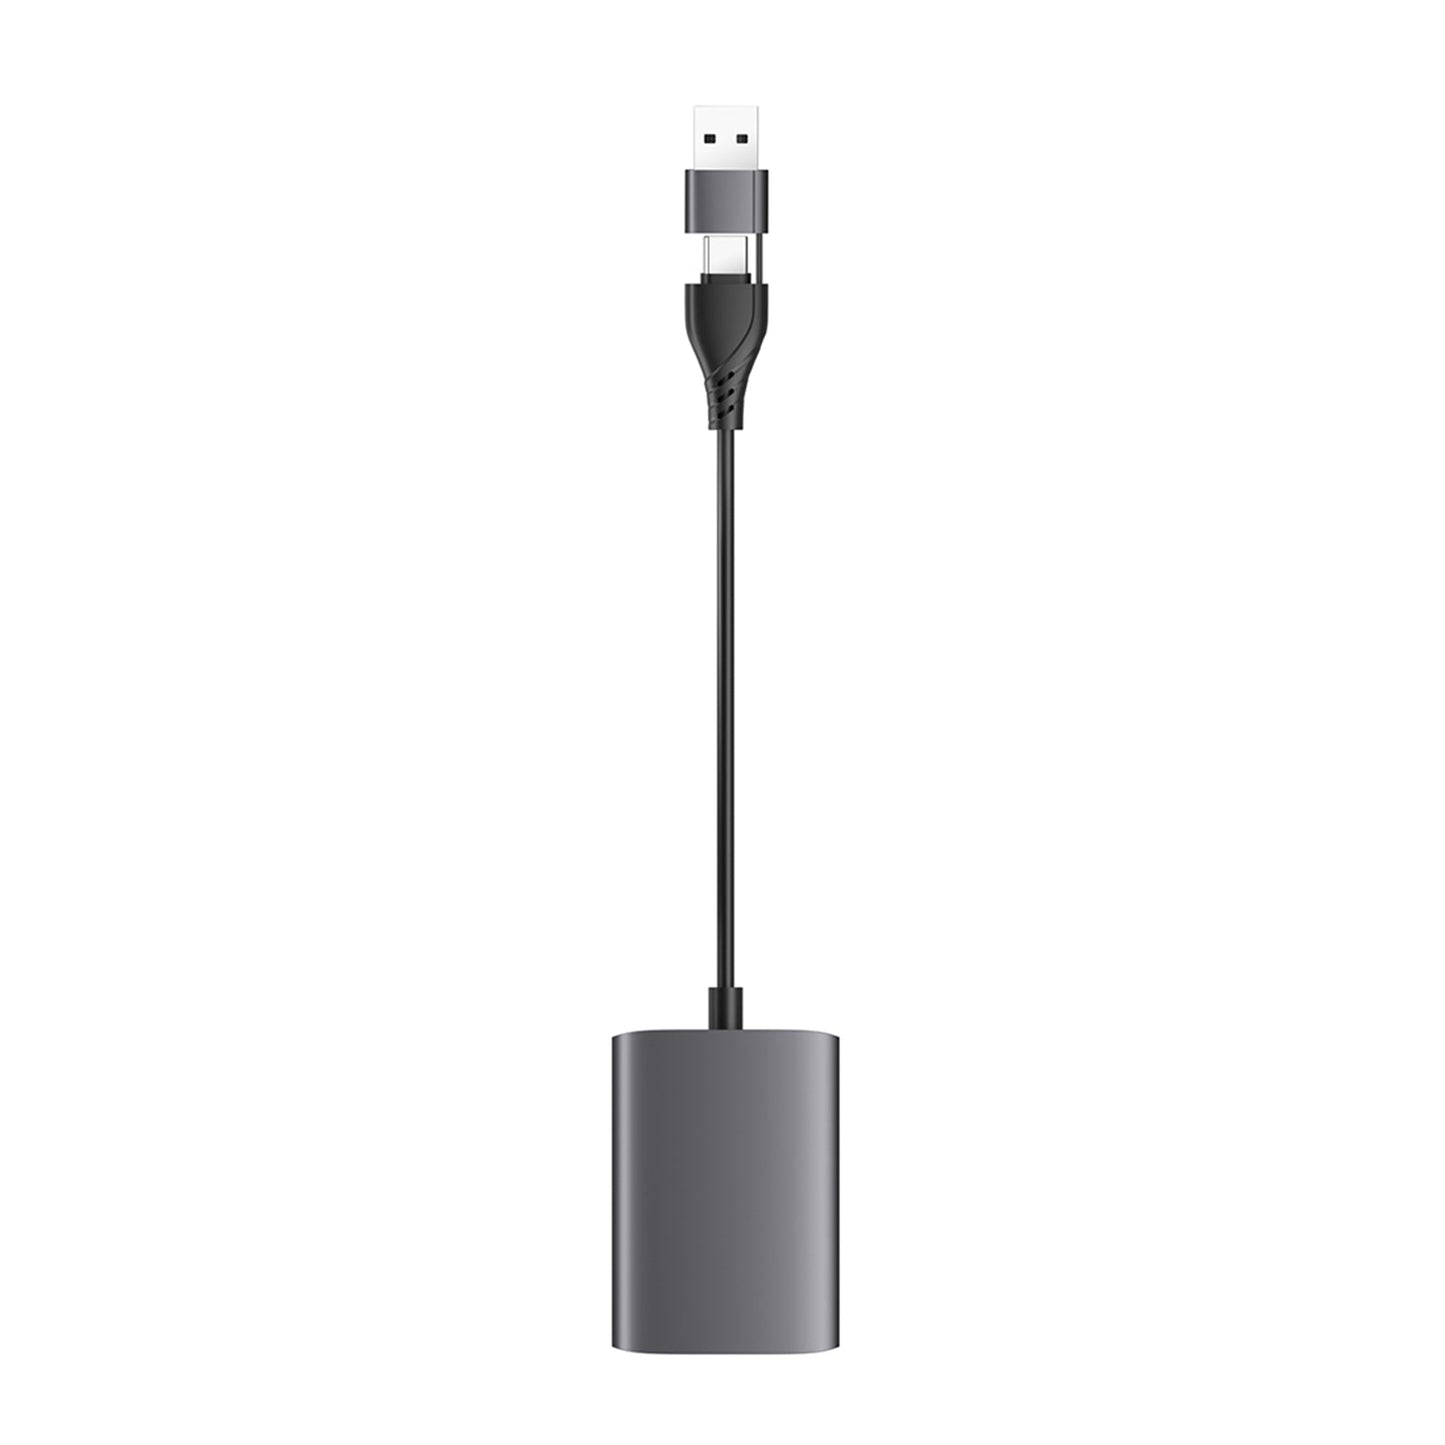 Type C/USB3.0 to Dual HDMI Adapter for Apple M1 M2 Mac Windows Type C/USB3.0 Hub